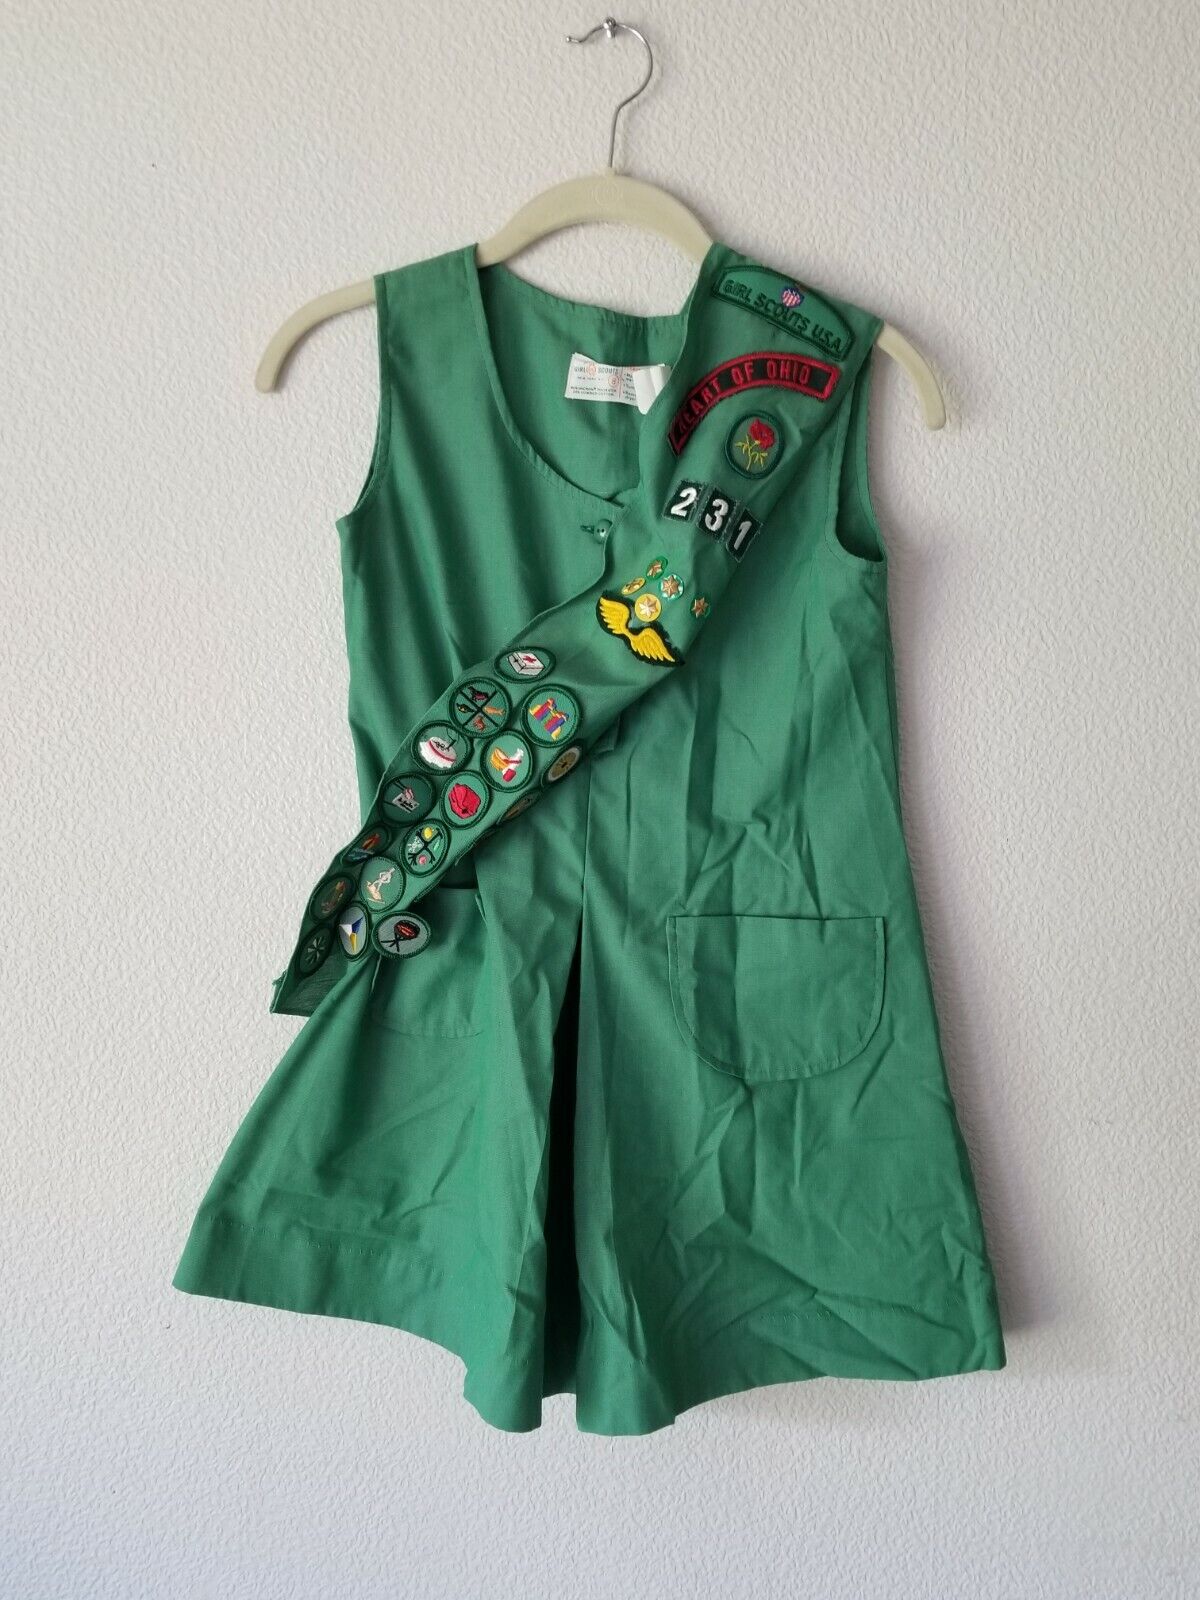 VINTAGE JUNIOR GIRL SCOUT UNIFORM Dress 8 + sash patches badges VERY GOOD OHIO